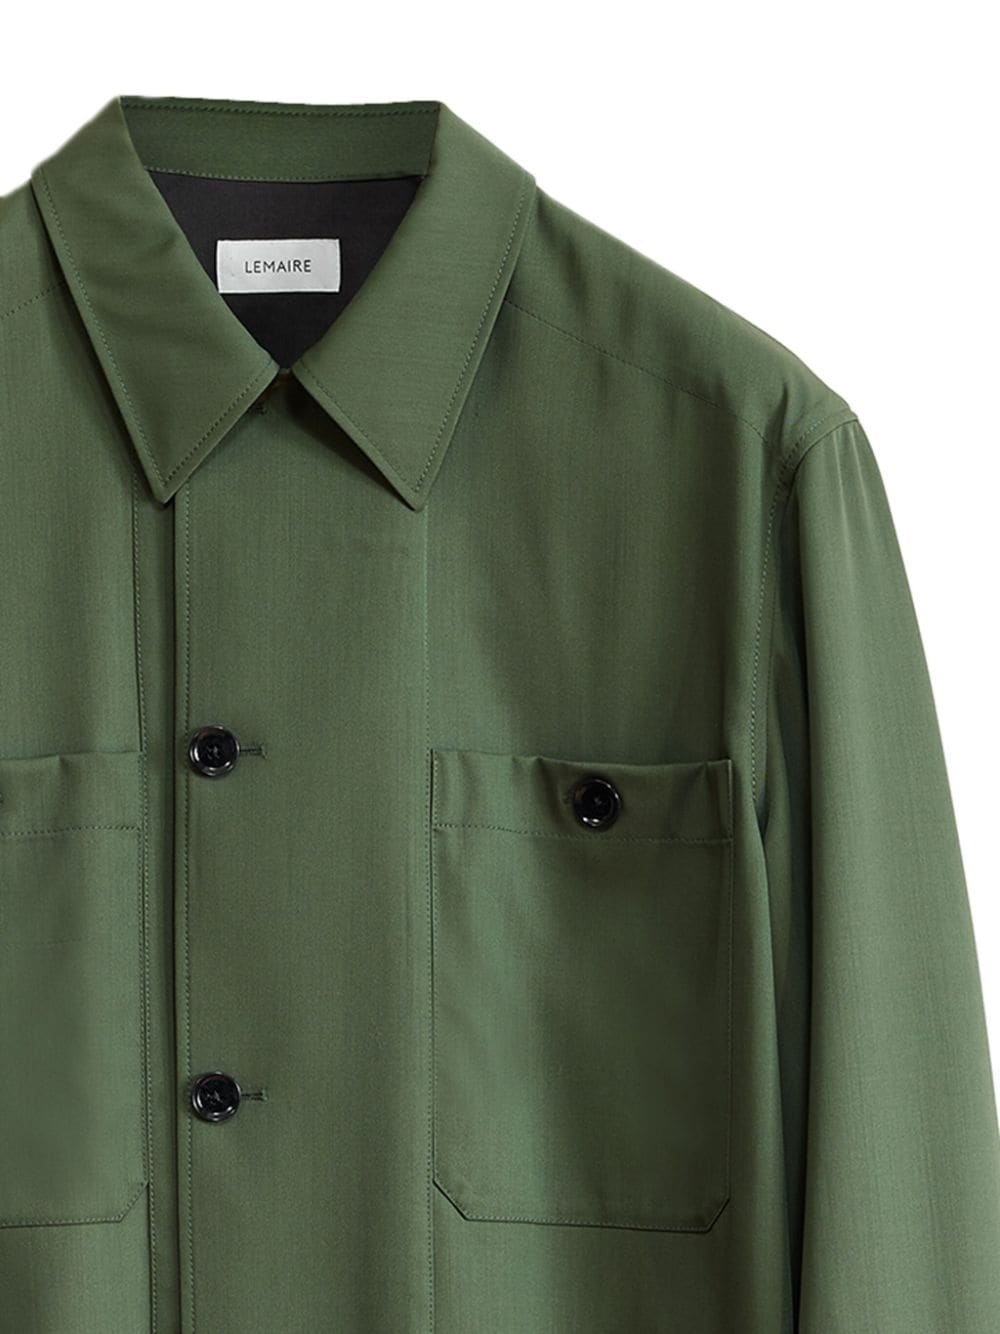 military-inspired shirt jacket - 2